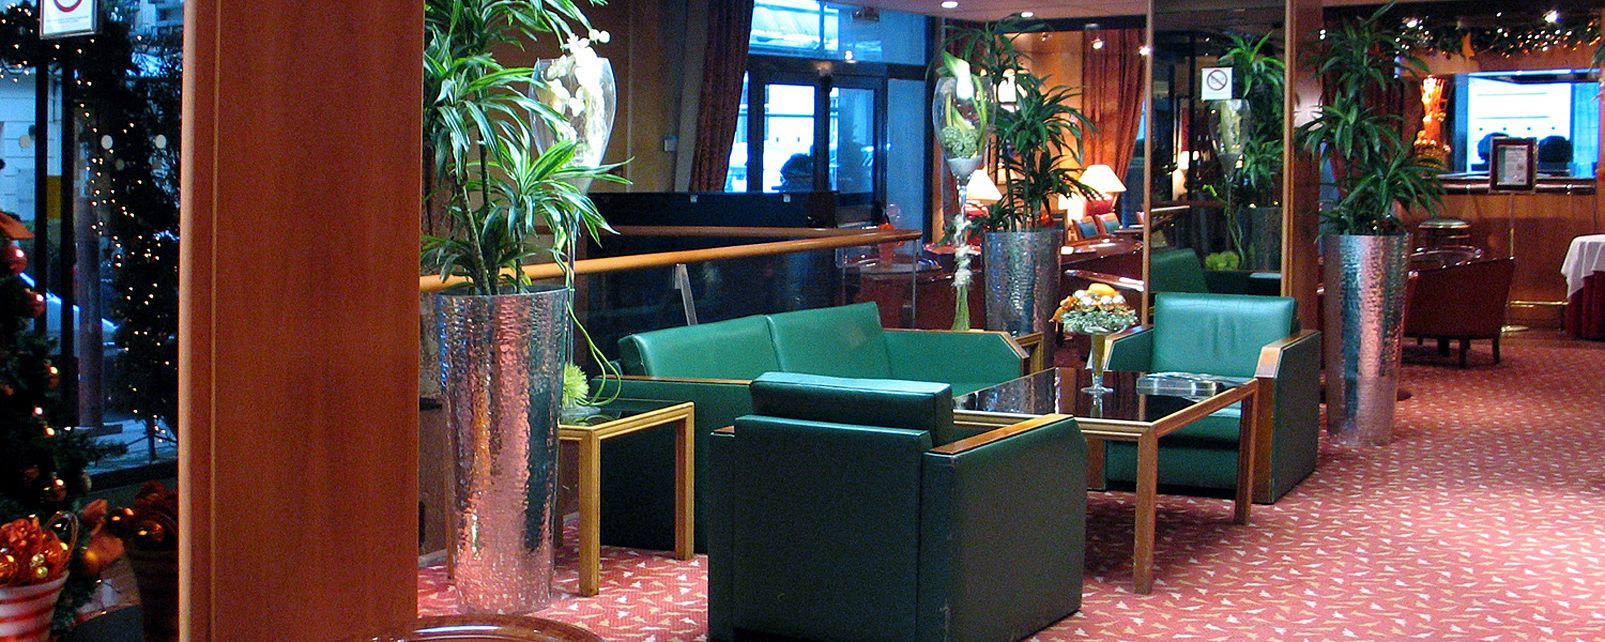 Hotel Holiday Inn Paris - St Germain des Pres